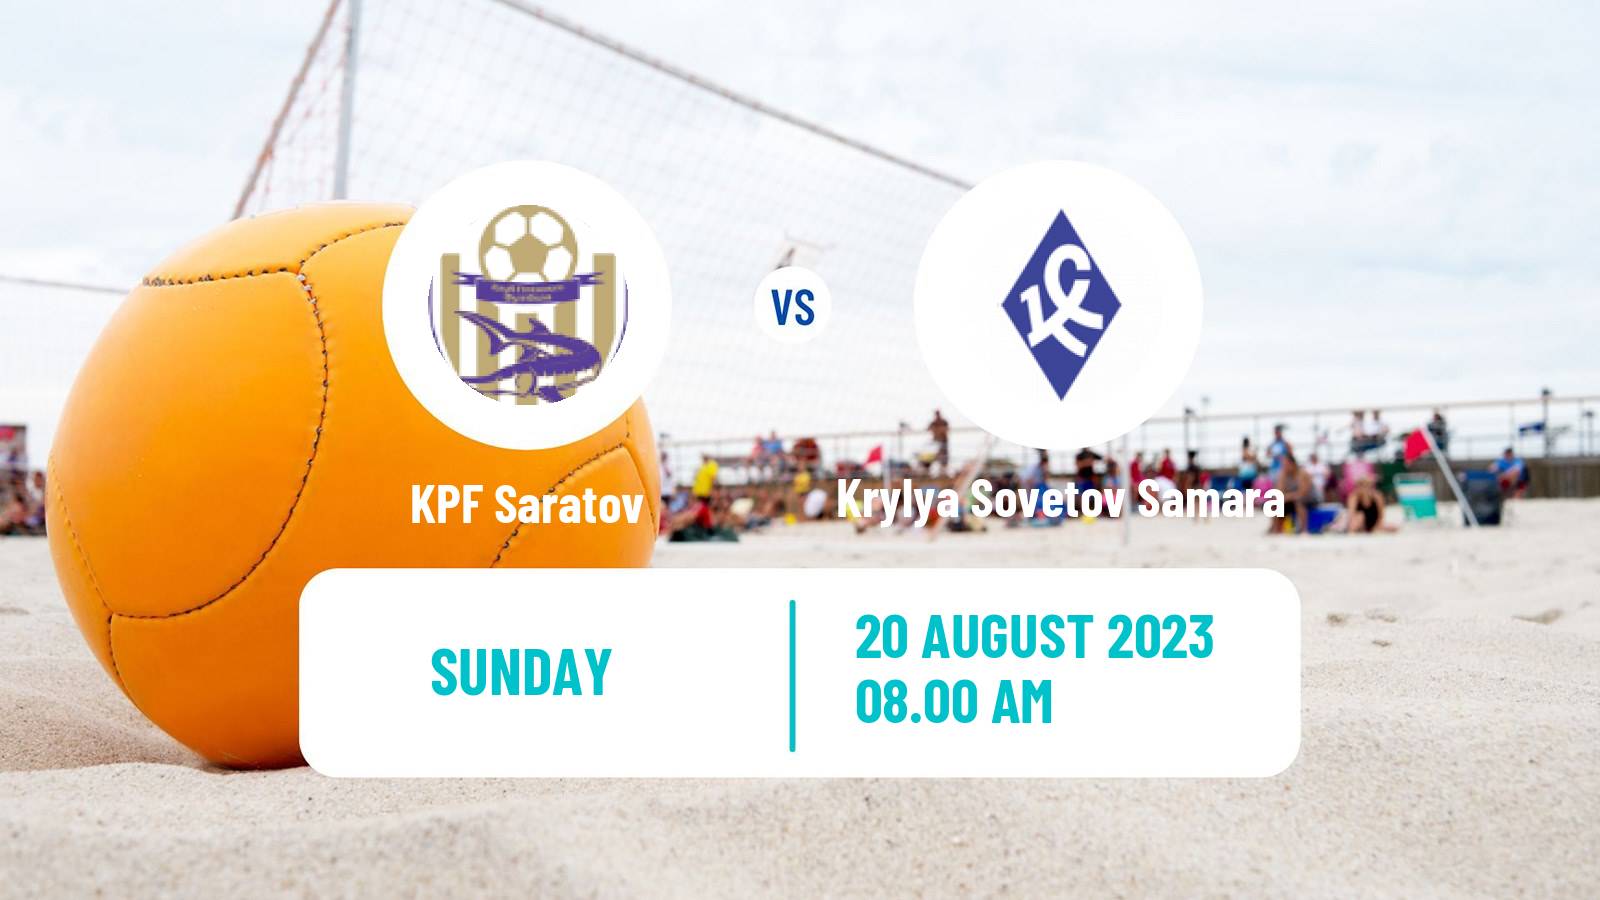 Beach soccer Superliga KPF Saratov - Krylya Sovetov Samara